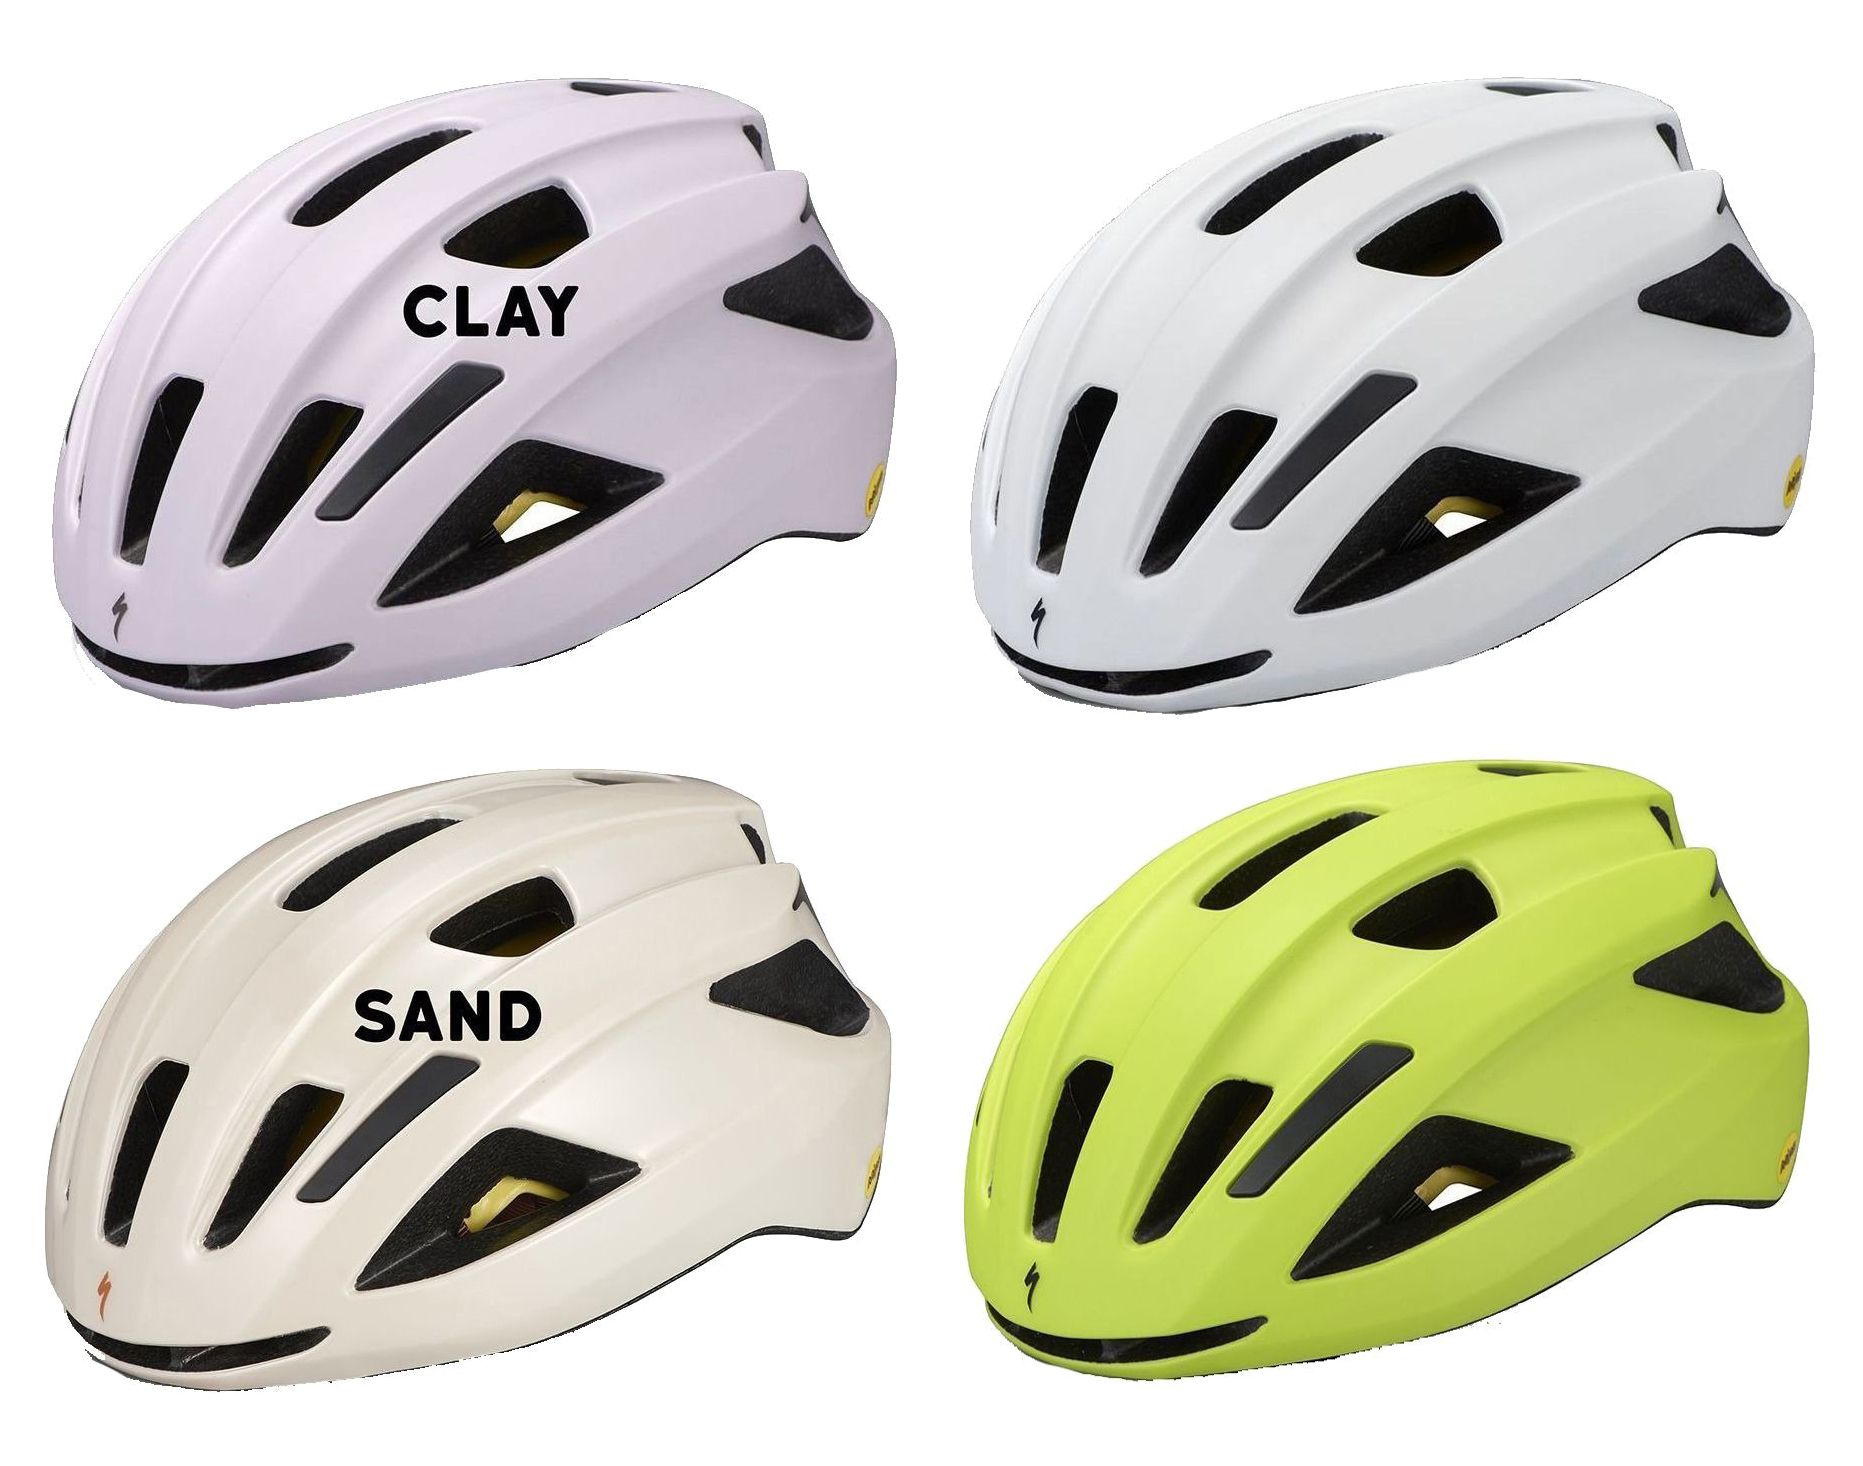 specialized align men's bike helmet